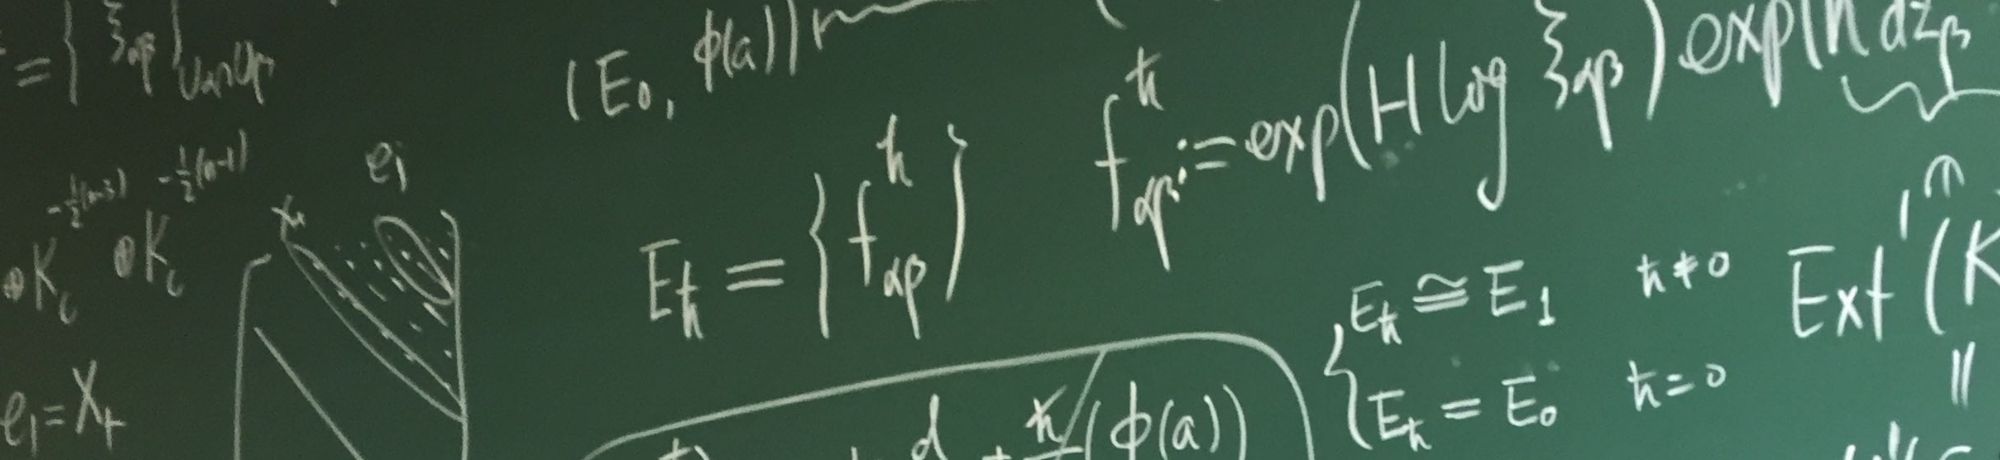 Math equations on a blackboard.